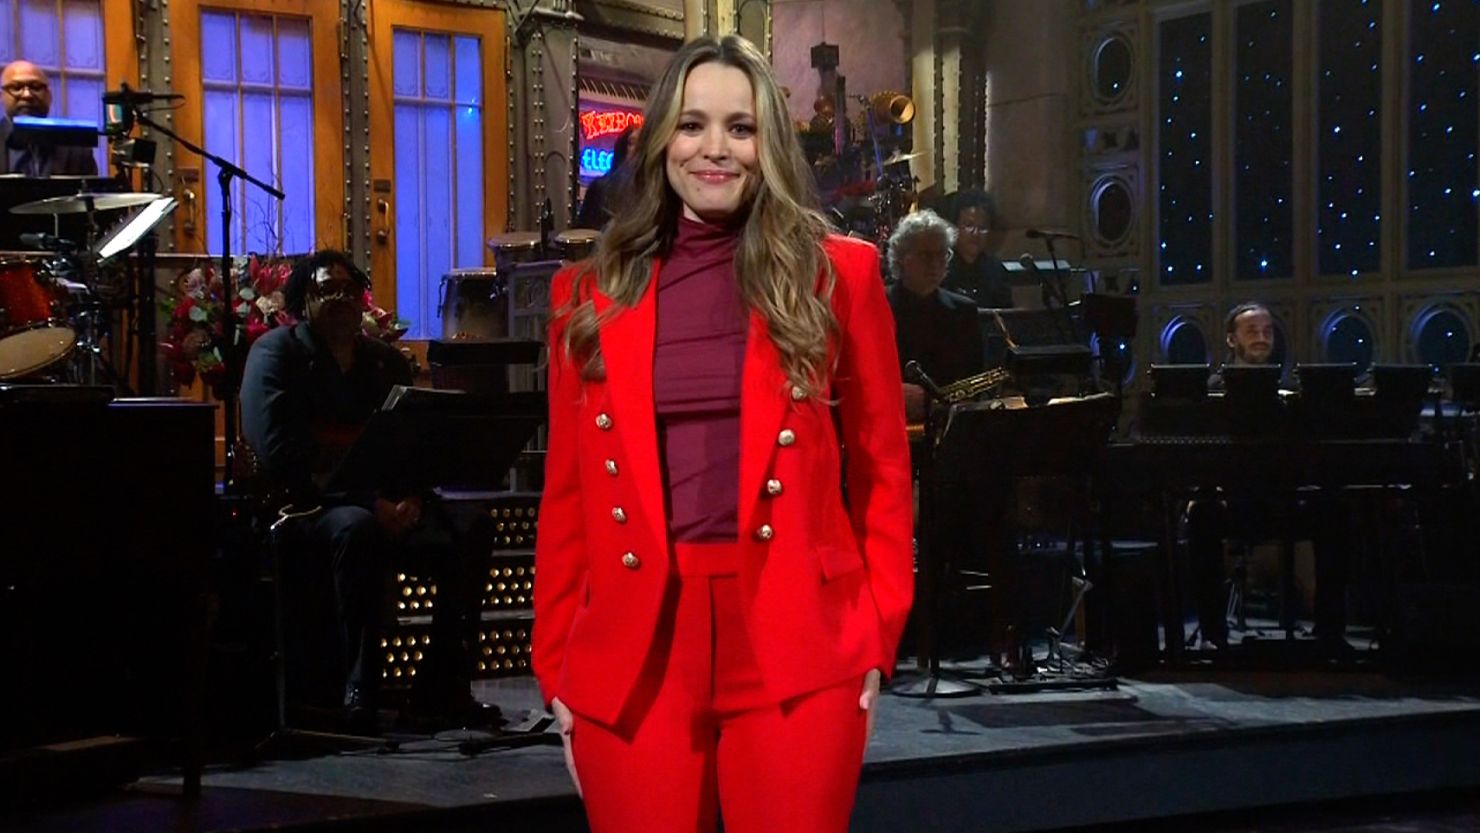 Rachel McAdams makes a surprise appearance on "Saturday Night Live" on January 20.